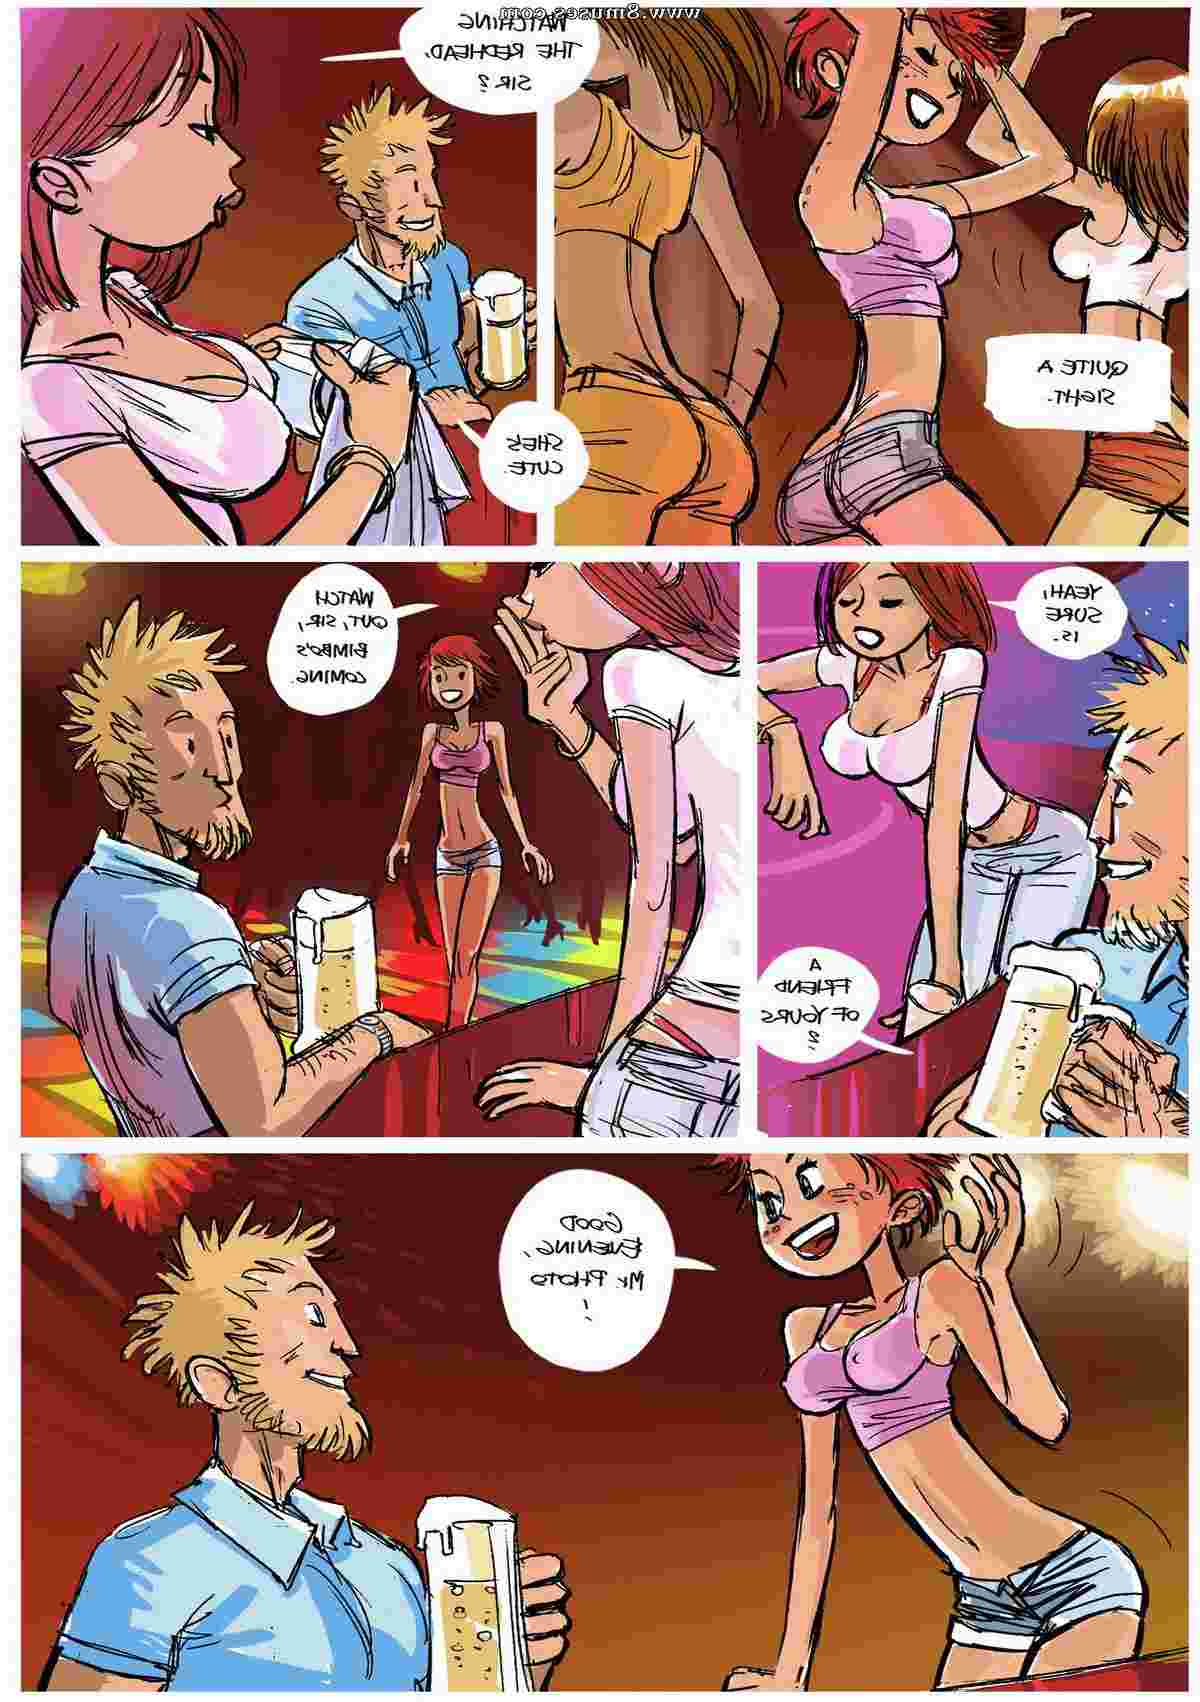 Slipshine-Comics/Lust-Boat Lust_Boat__8muses_-_Sex_and_Porn_Comics_10.jpg